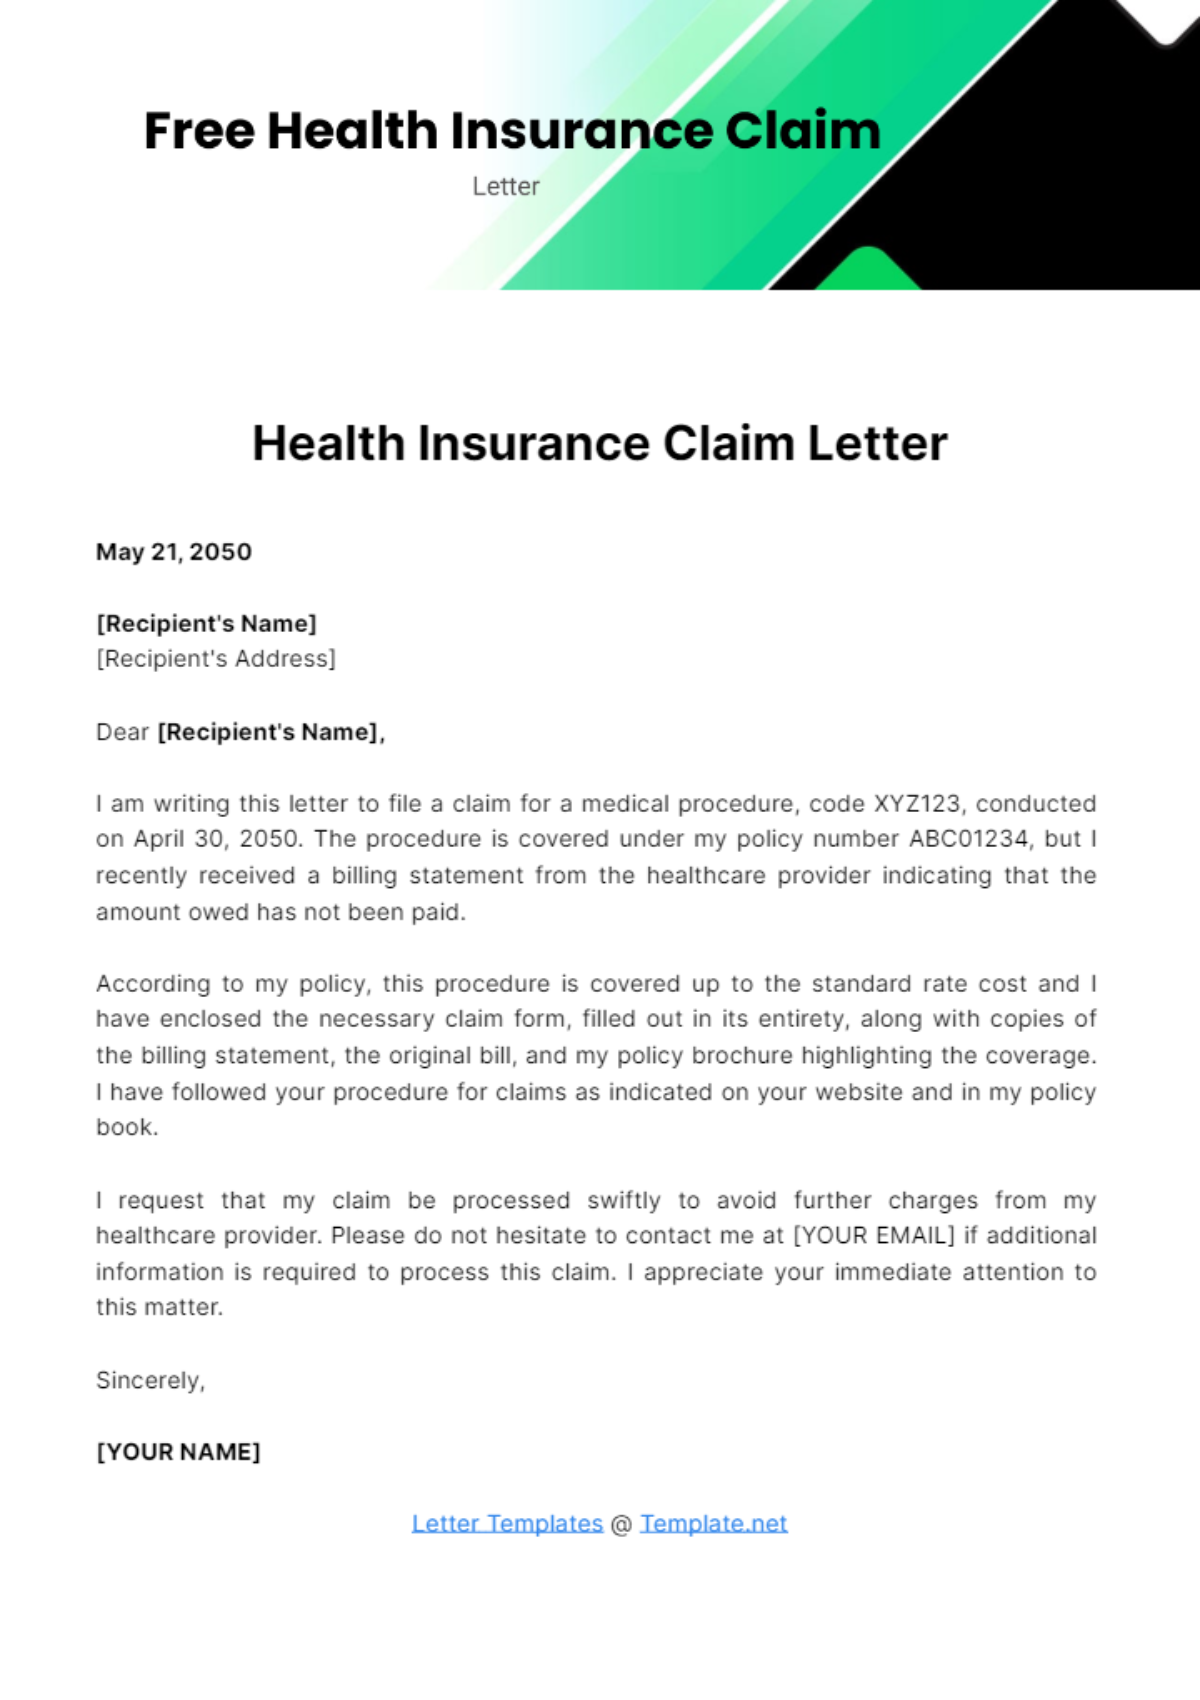 Health Insurance Claim Letter Template